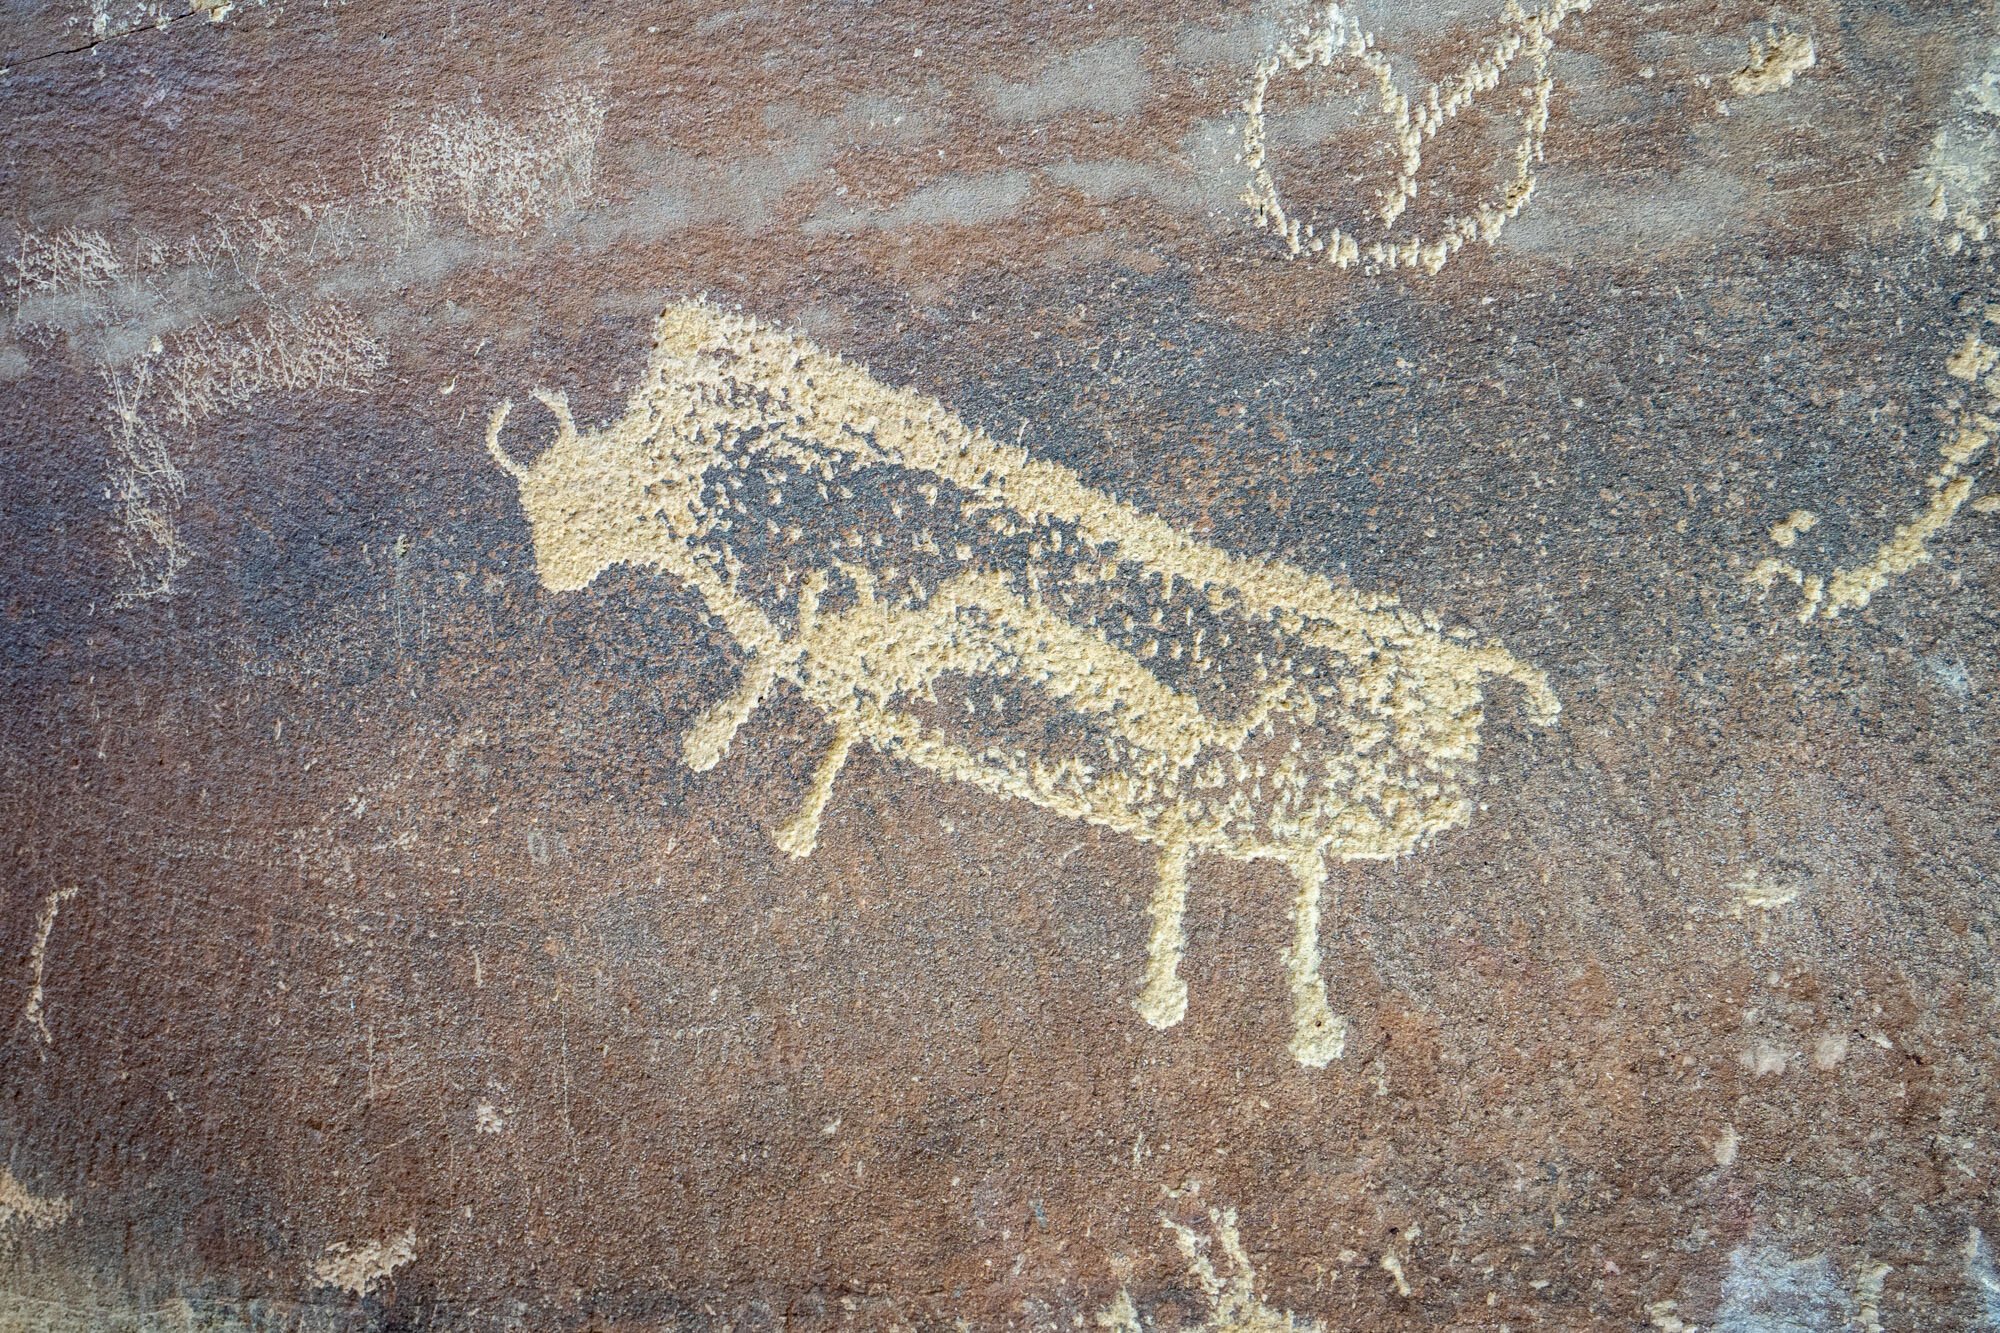 Pregnant Buffalo rock art